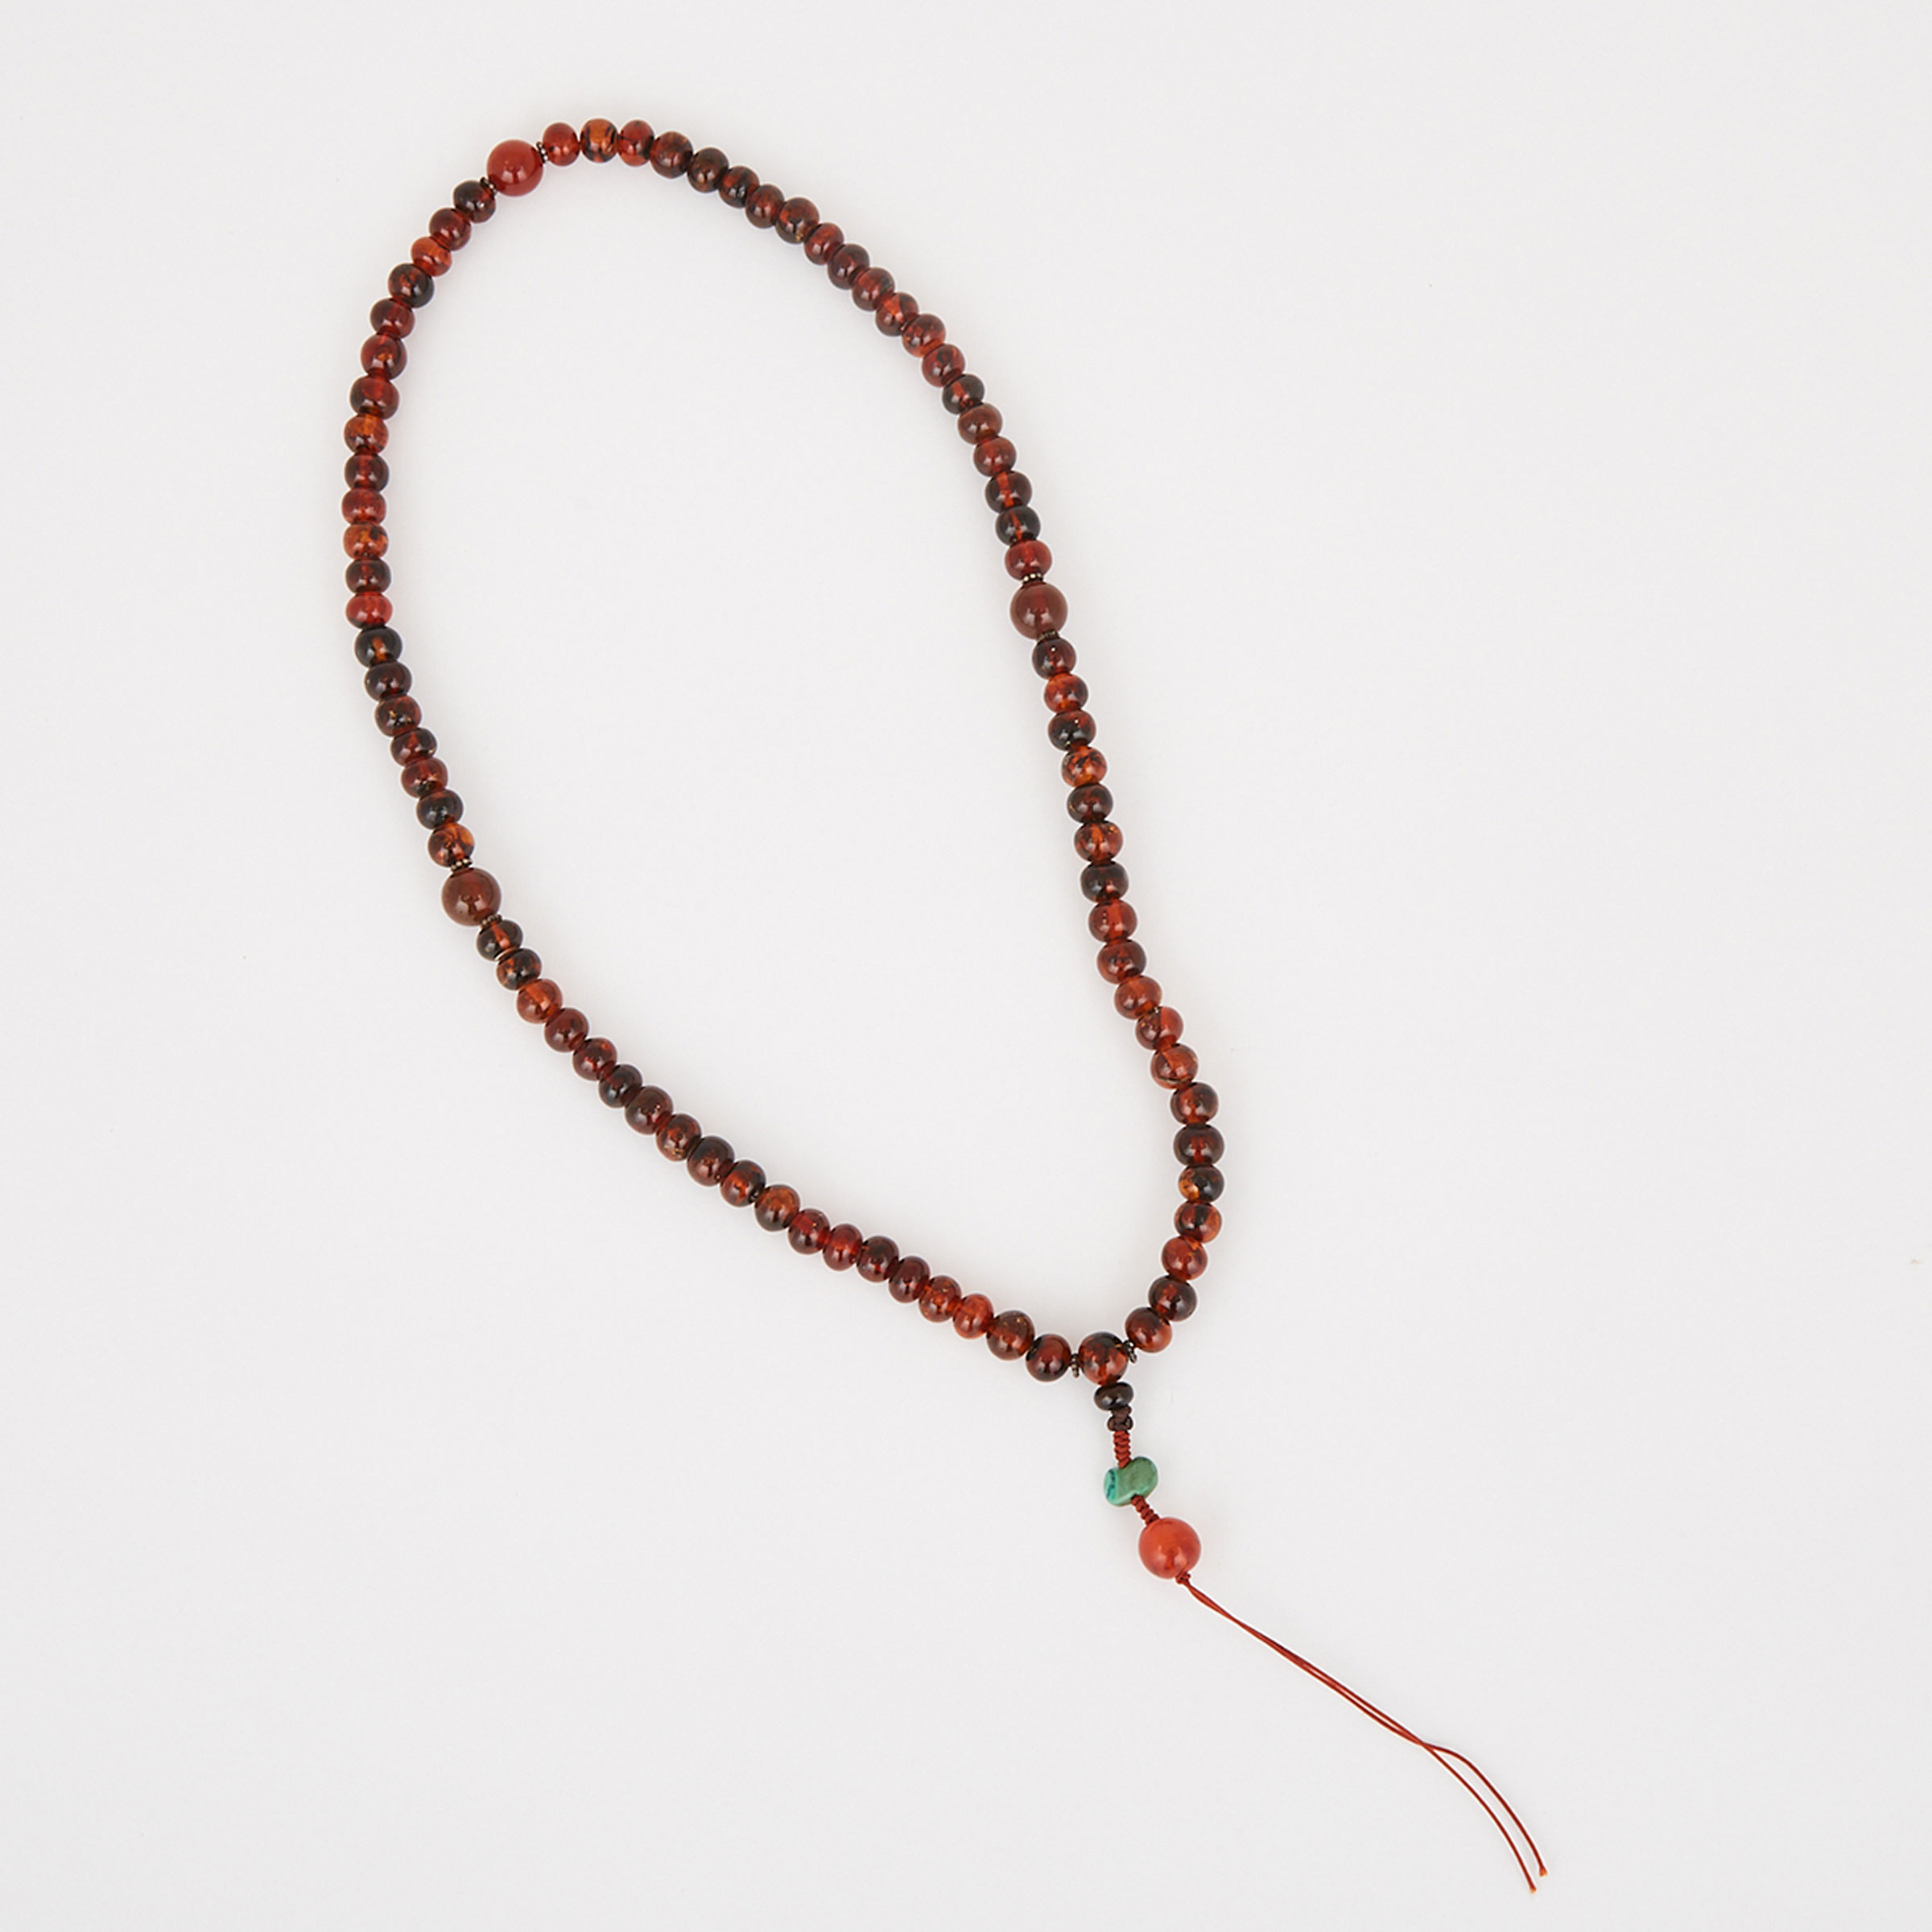 An Amber Mala Prayer Bead Necklace, Sino-Tibetan, 19th Century or Earlier